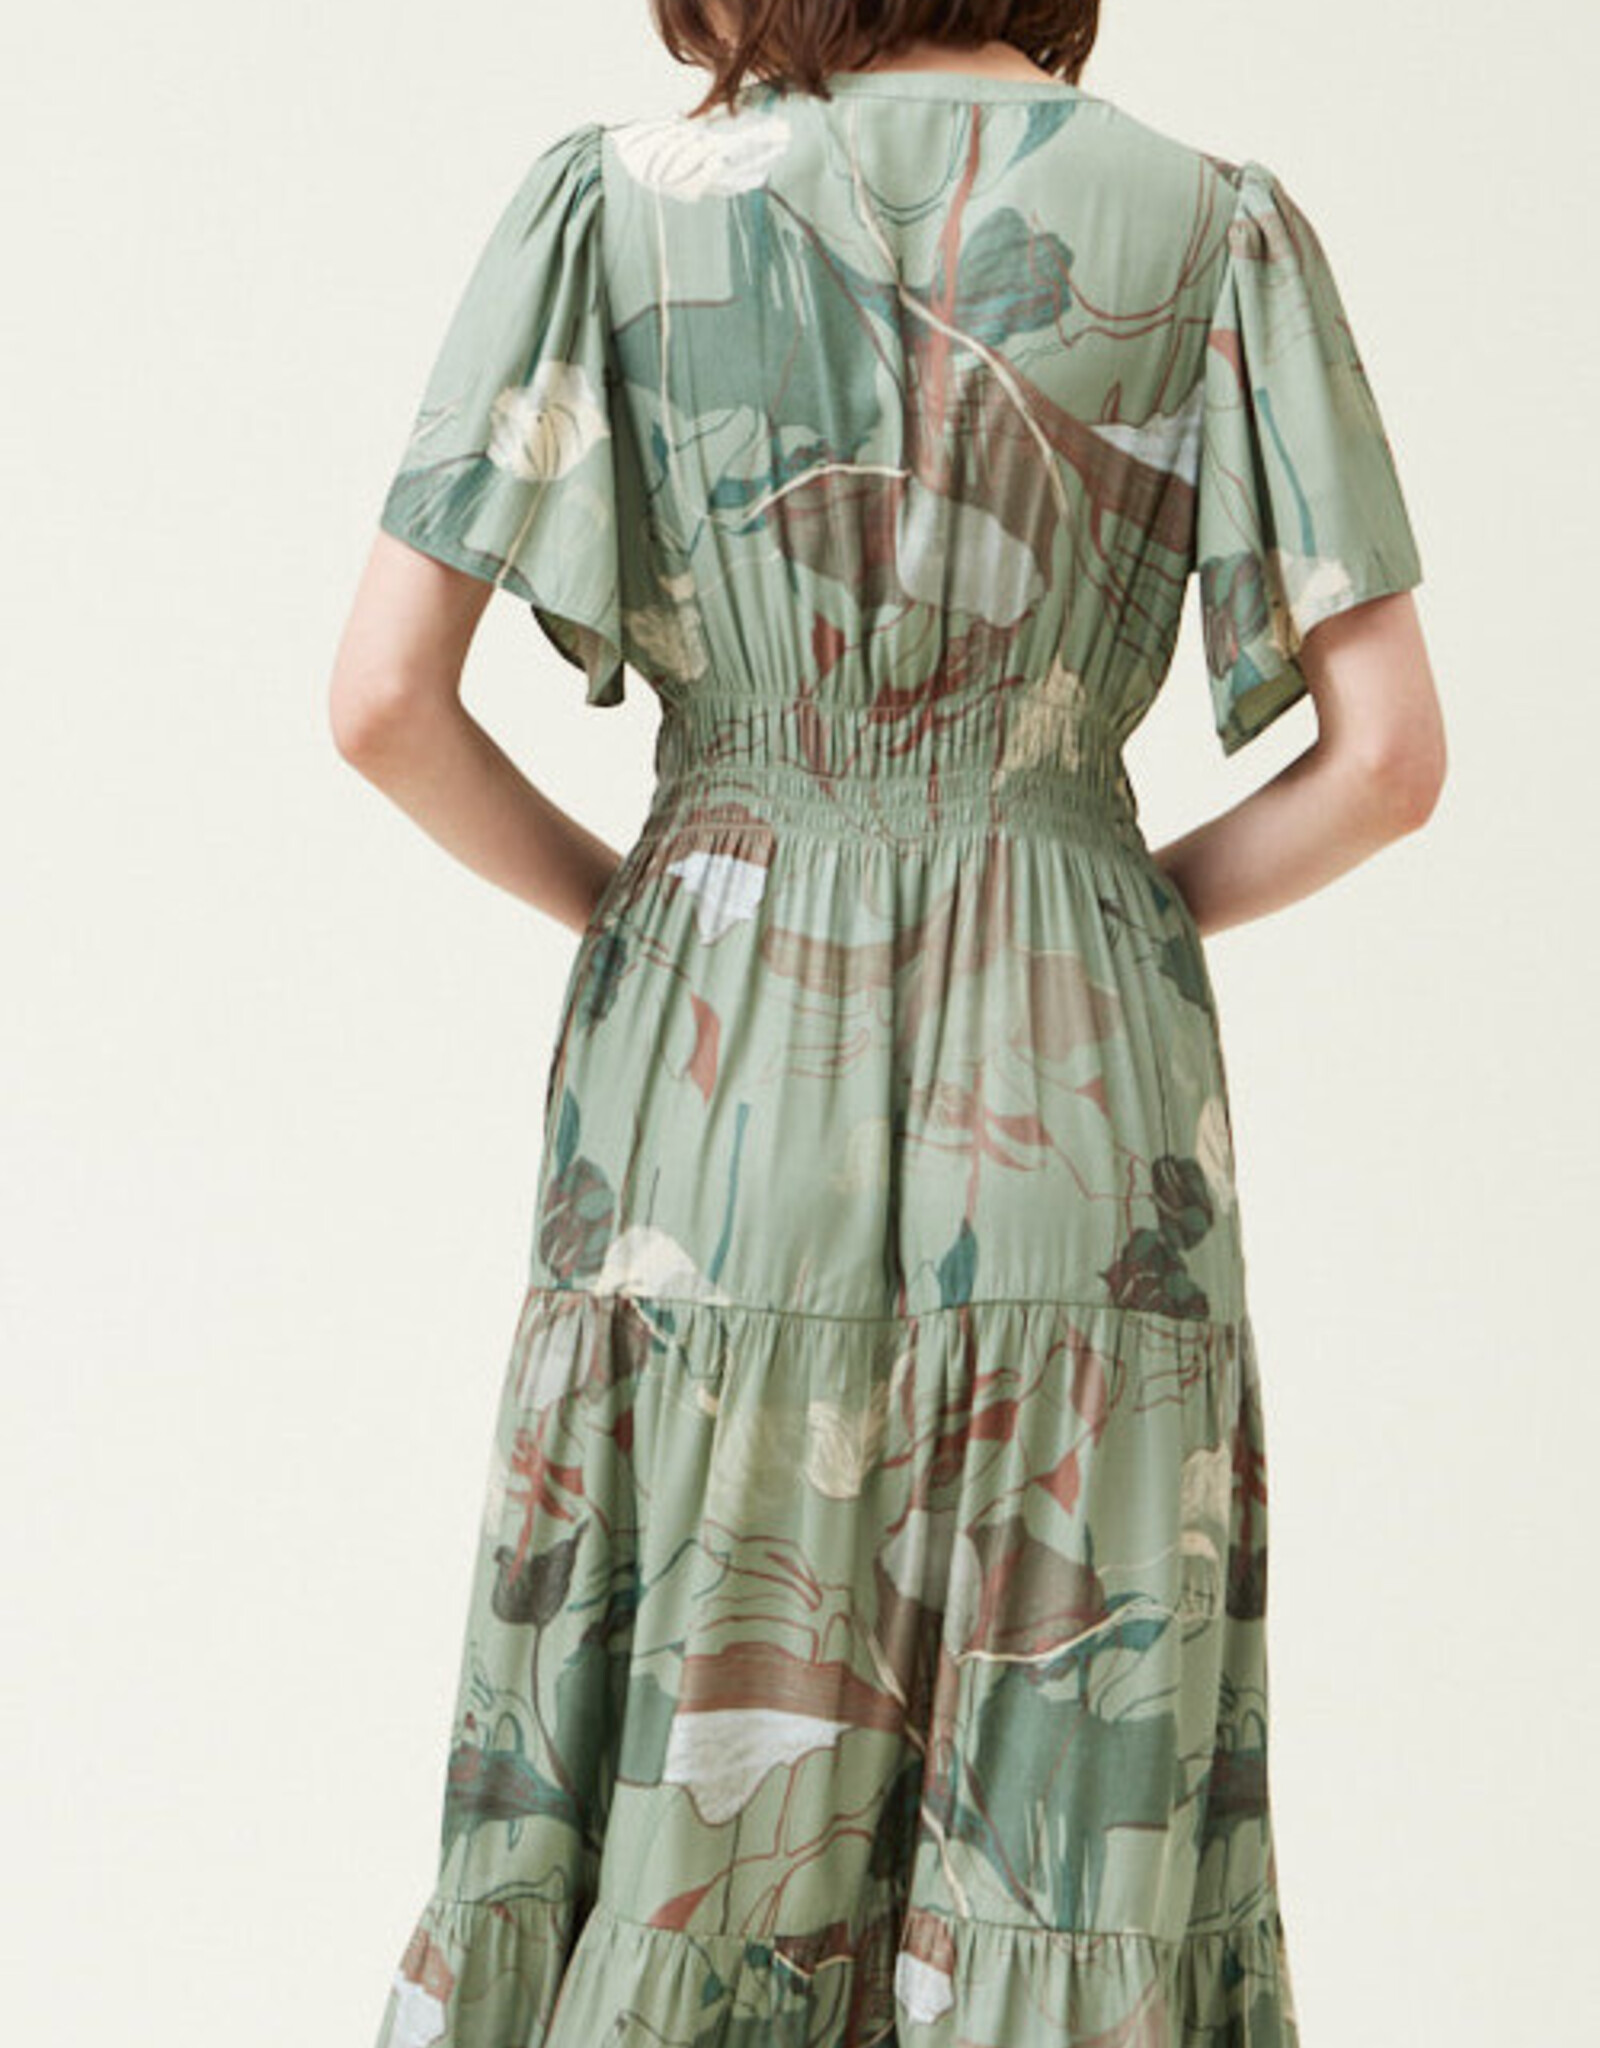 G&G G&G Modern Floral Midi Dress